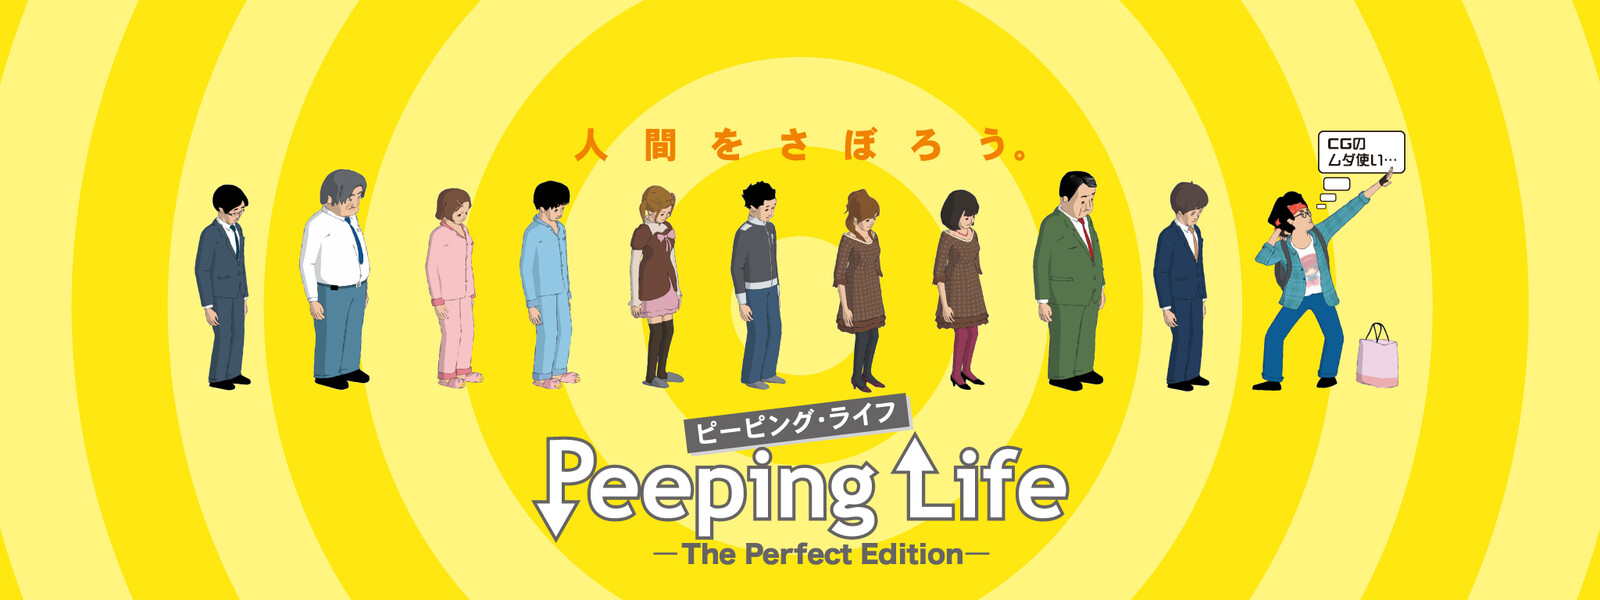 Peeping Life (ピーピング･ライフ) -The Perfect Edition- イエロー盤の動画 - Peeping Life (ピーピング･ライフ) 5.0ch